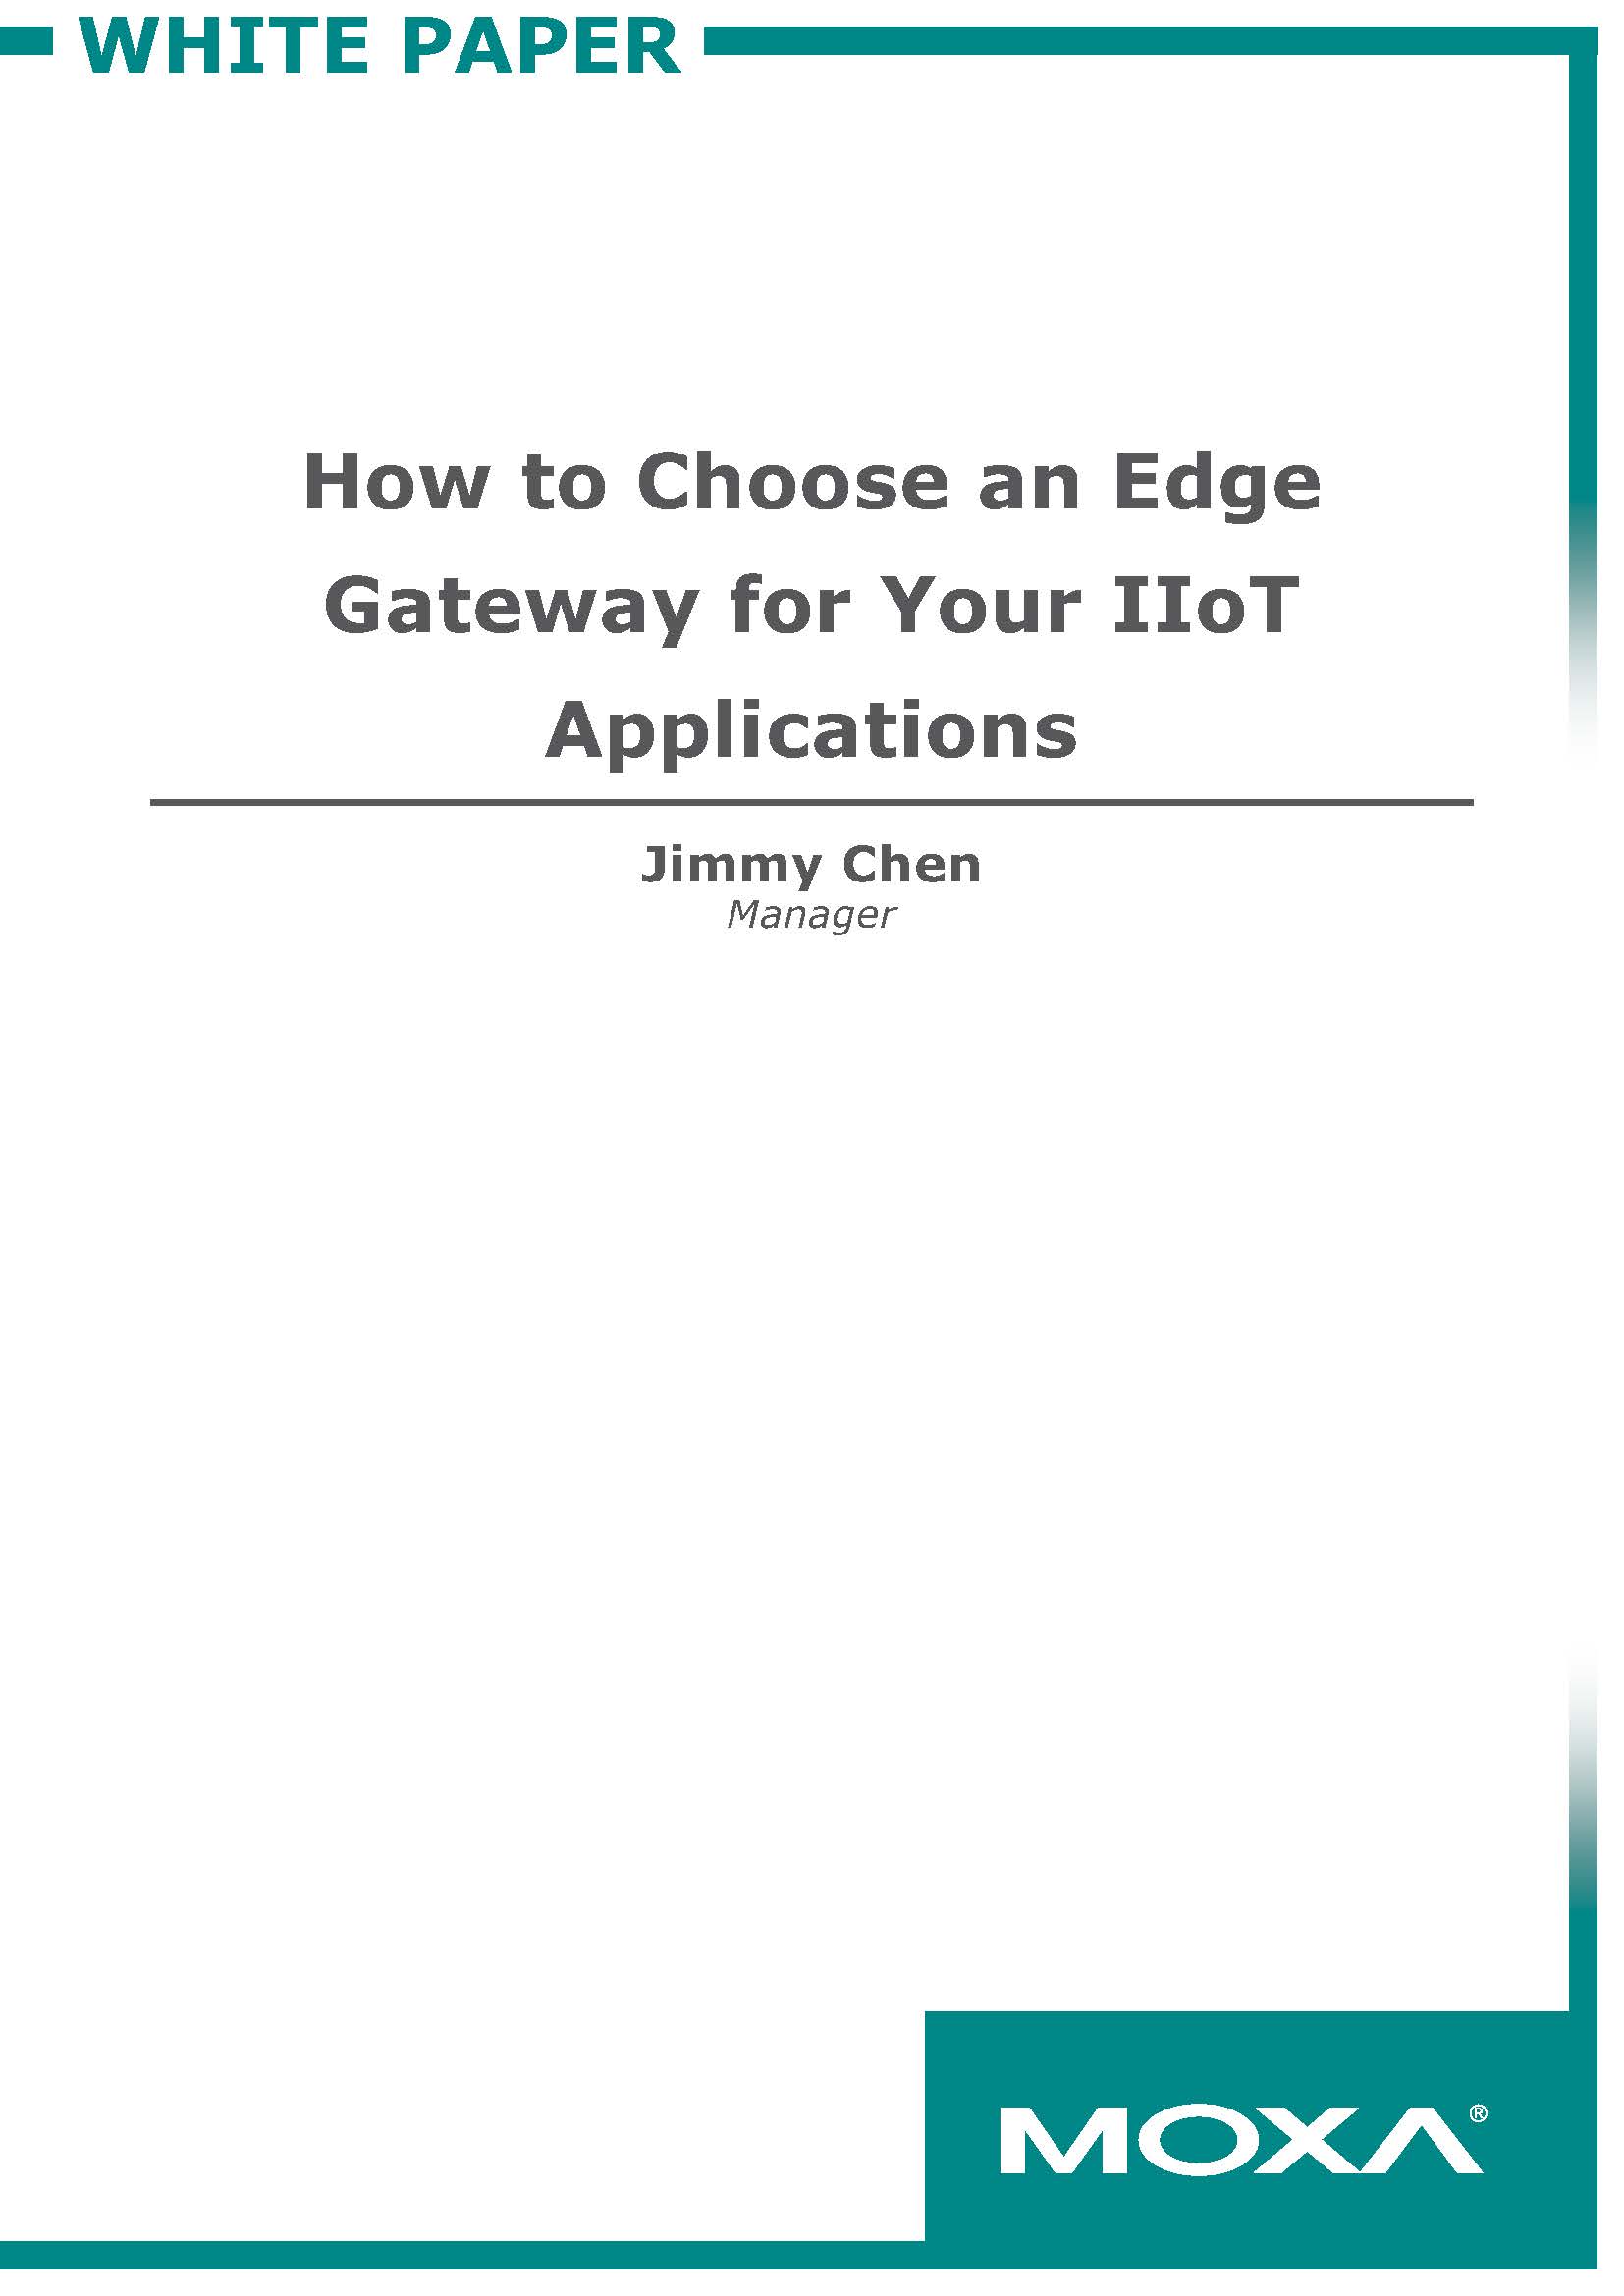 Choosing_a_Good_Edge_Gateway_for_the_IIoT_Page_1.jpg